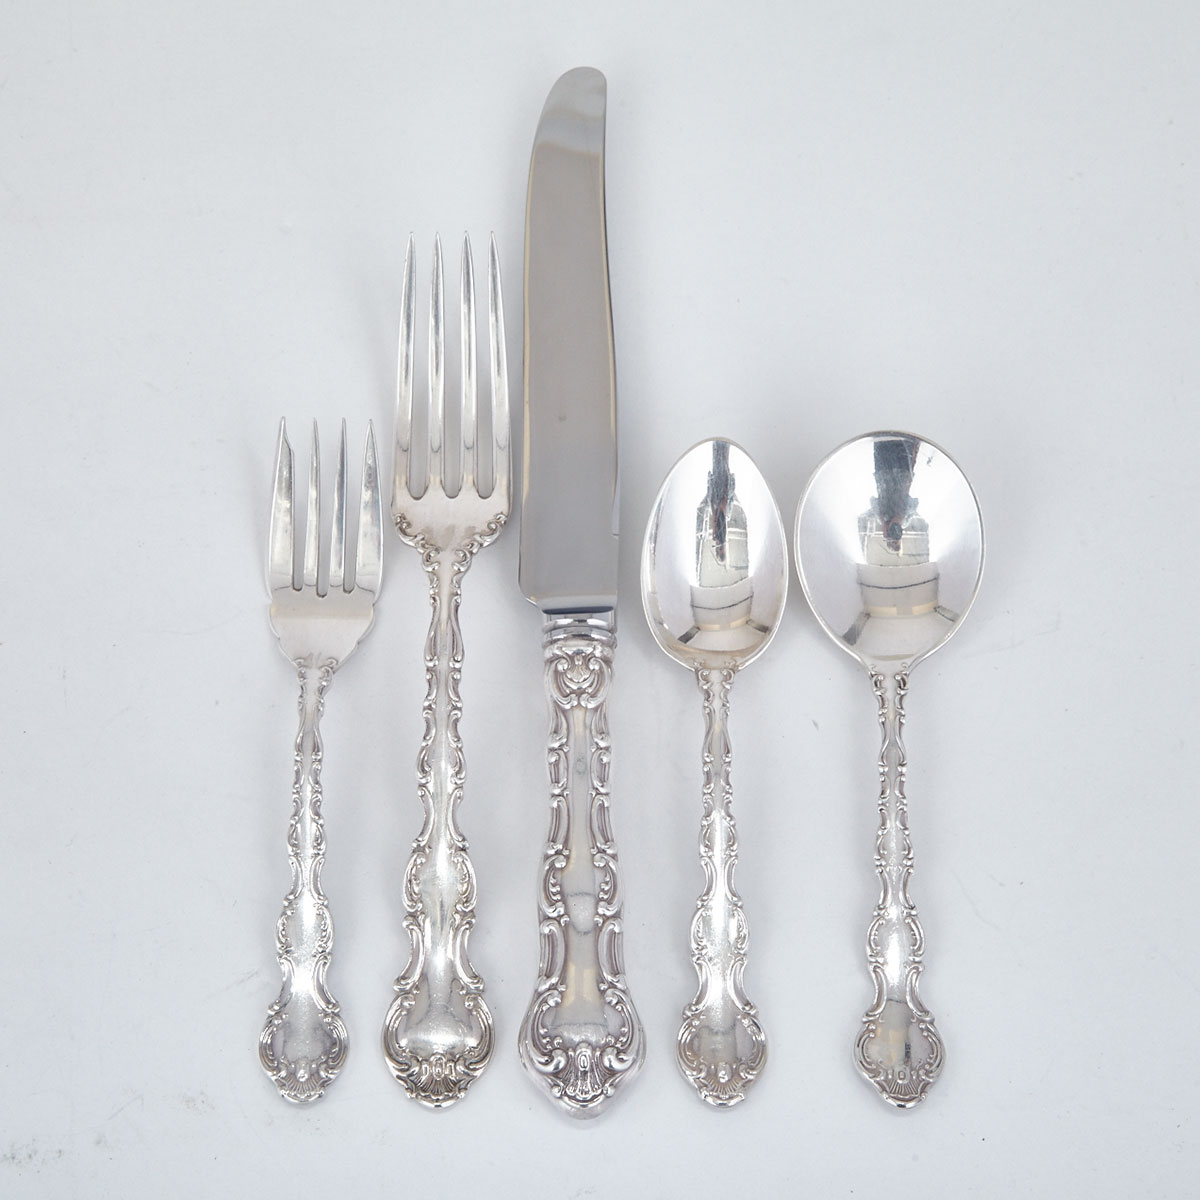 Canadian ‘Regency’ Silver Plated ‘Pompadour’ (or ‘Louis de France’) Pattern Flatware Service, Henry Birks & Sons, 20th century